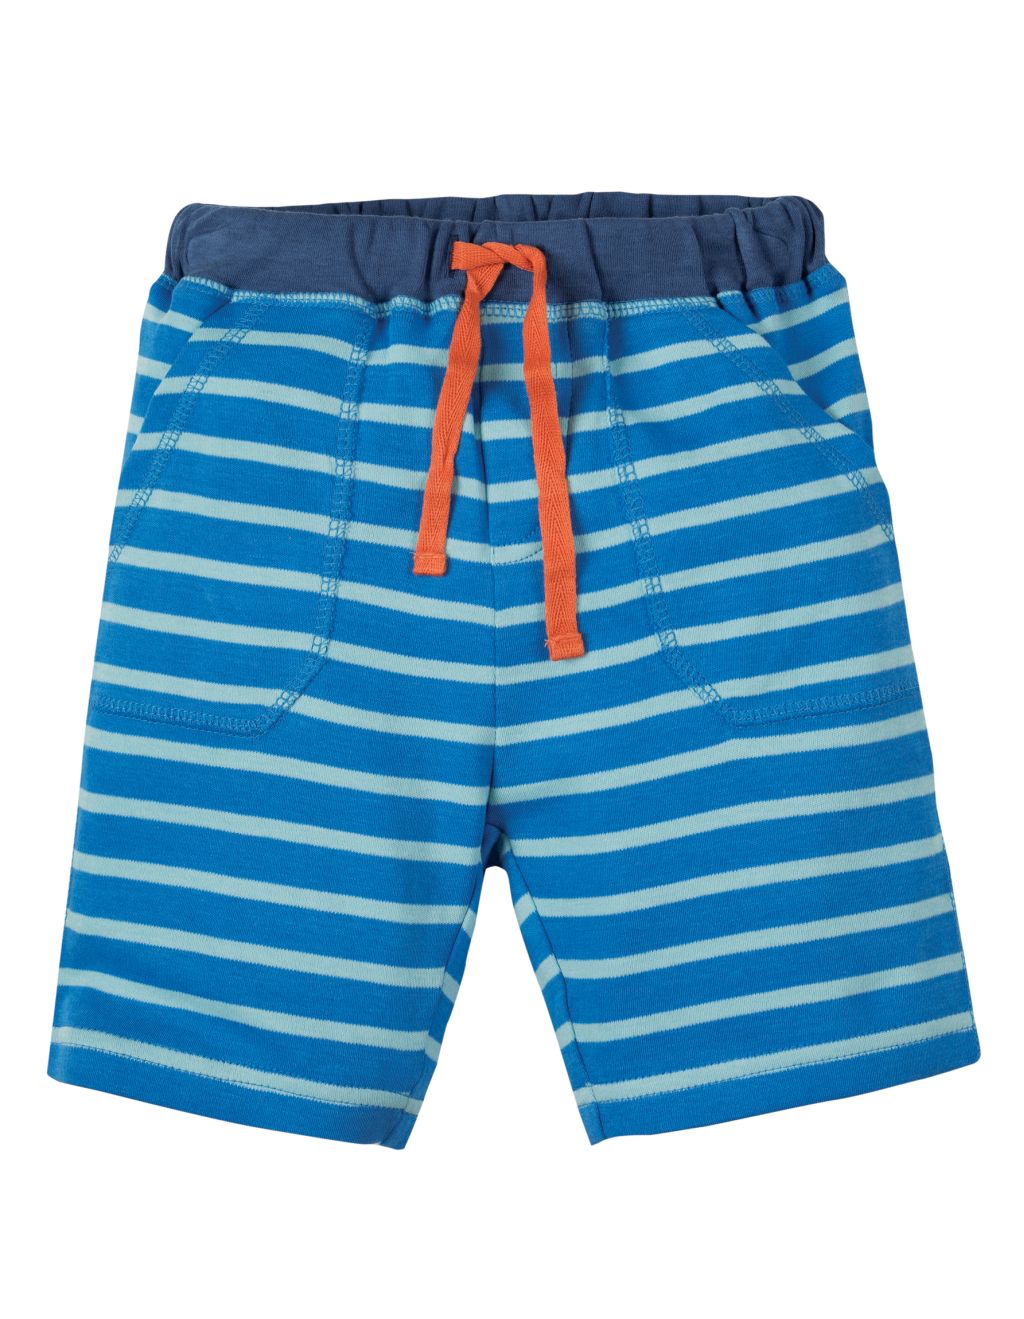 Little Stripy Shorts sail blue breton 68/80